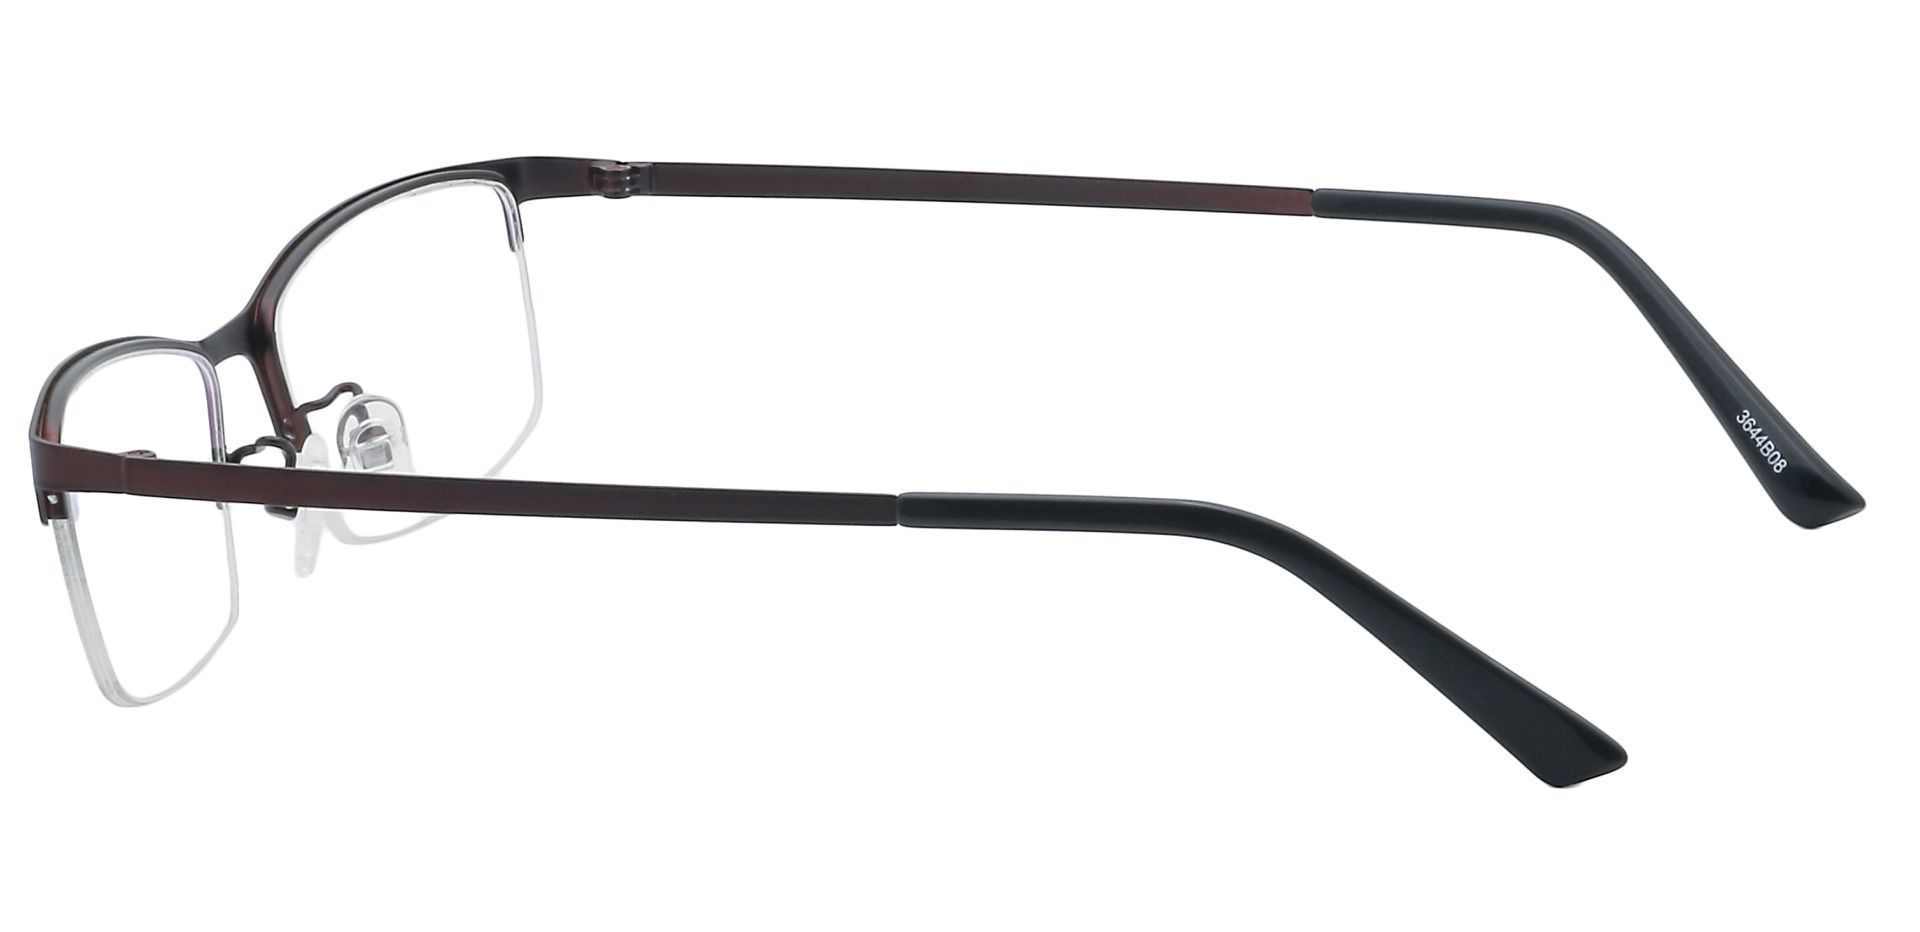 Parsley Rectangle Progressive Glasses - Brown